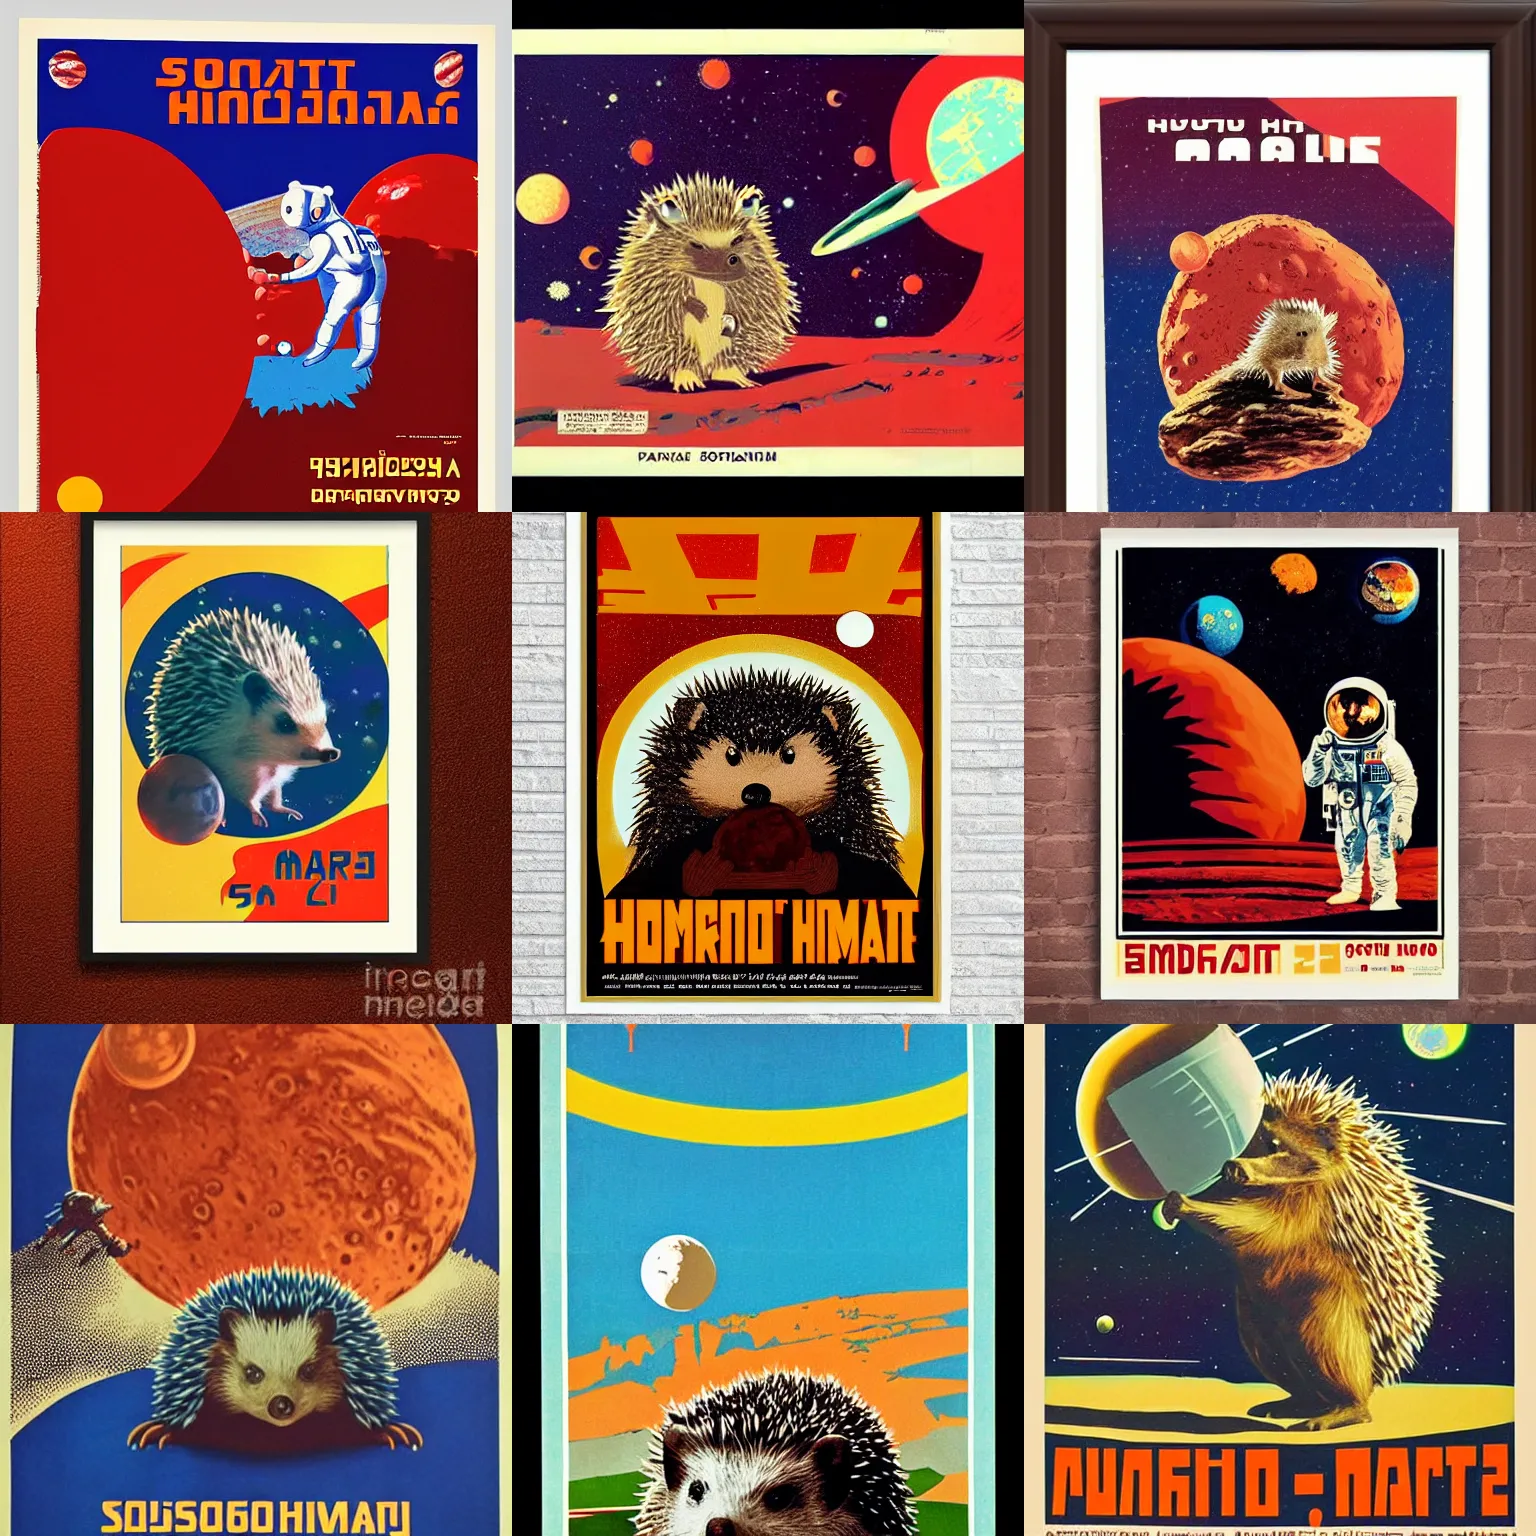 Prompt: Hedgehog cosmonaut portrait, planet mars, 60s poster, 1972 Soviet